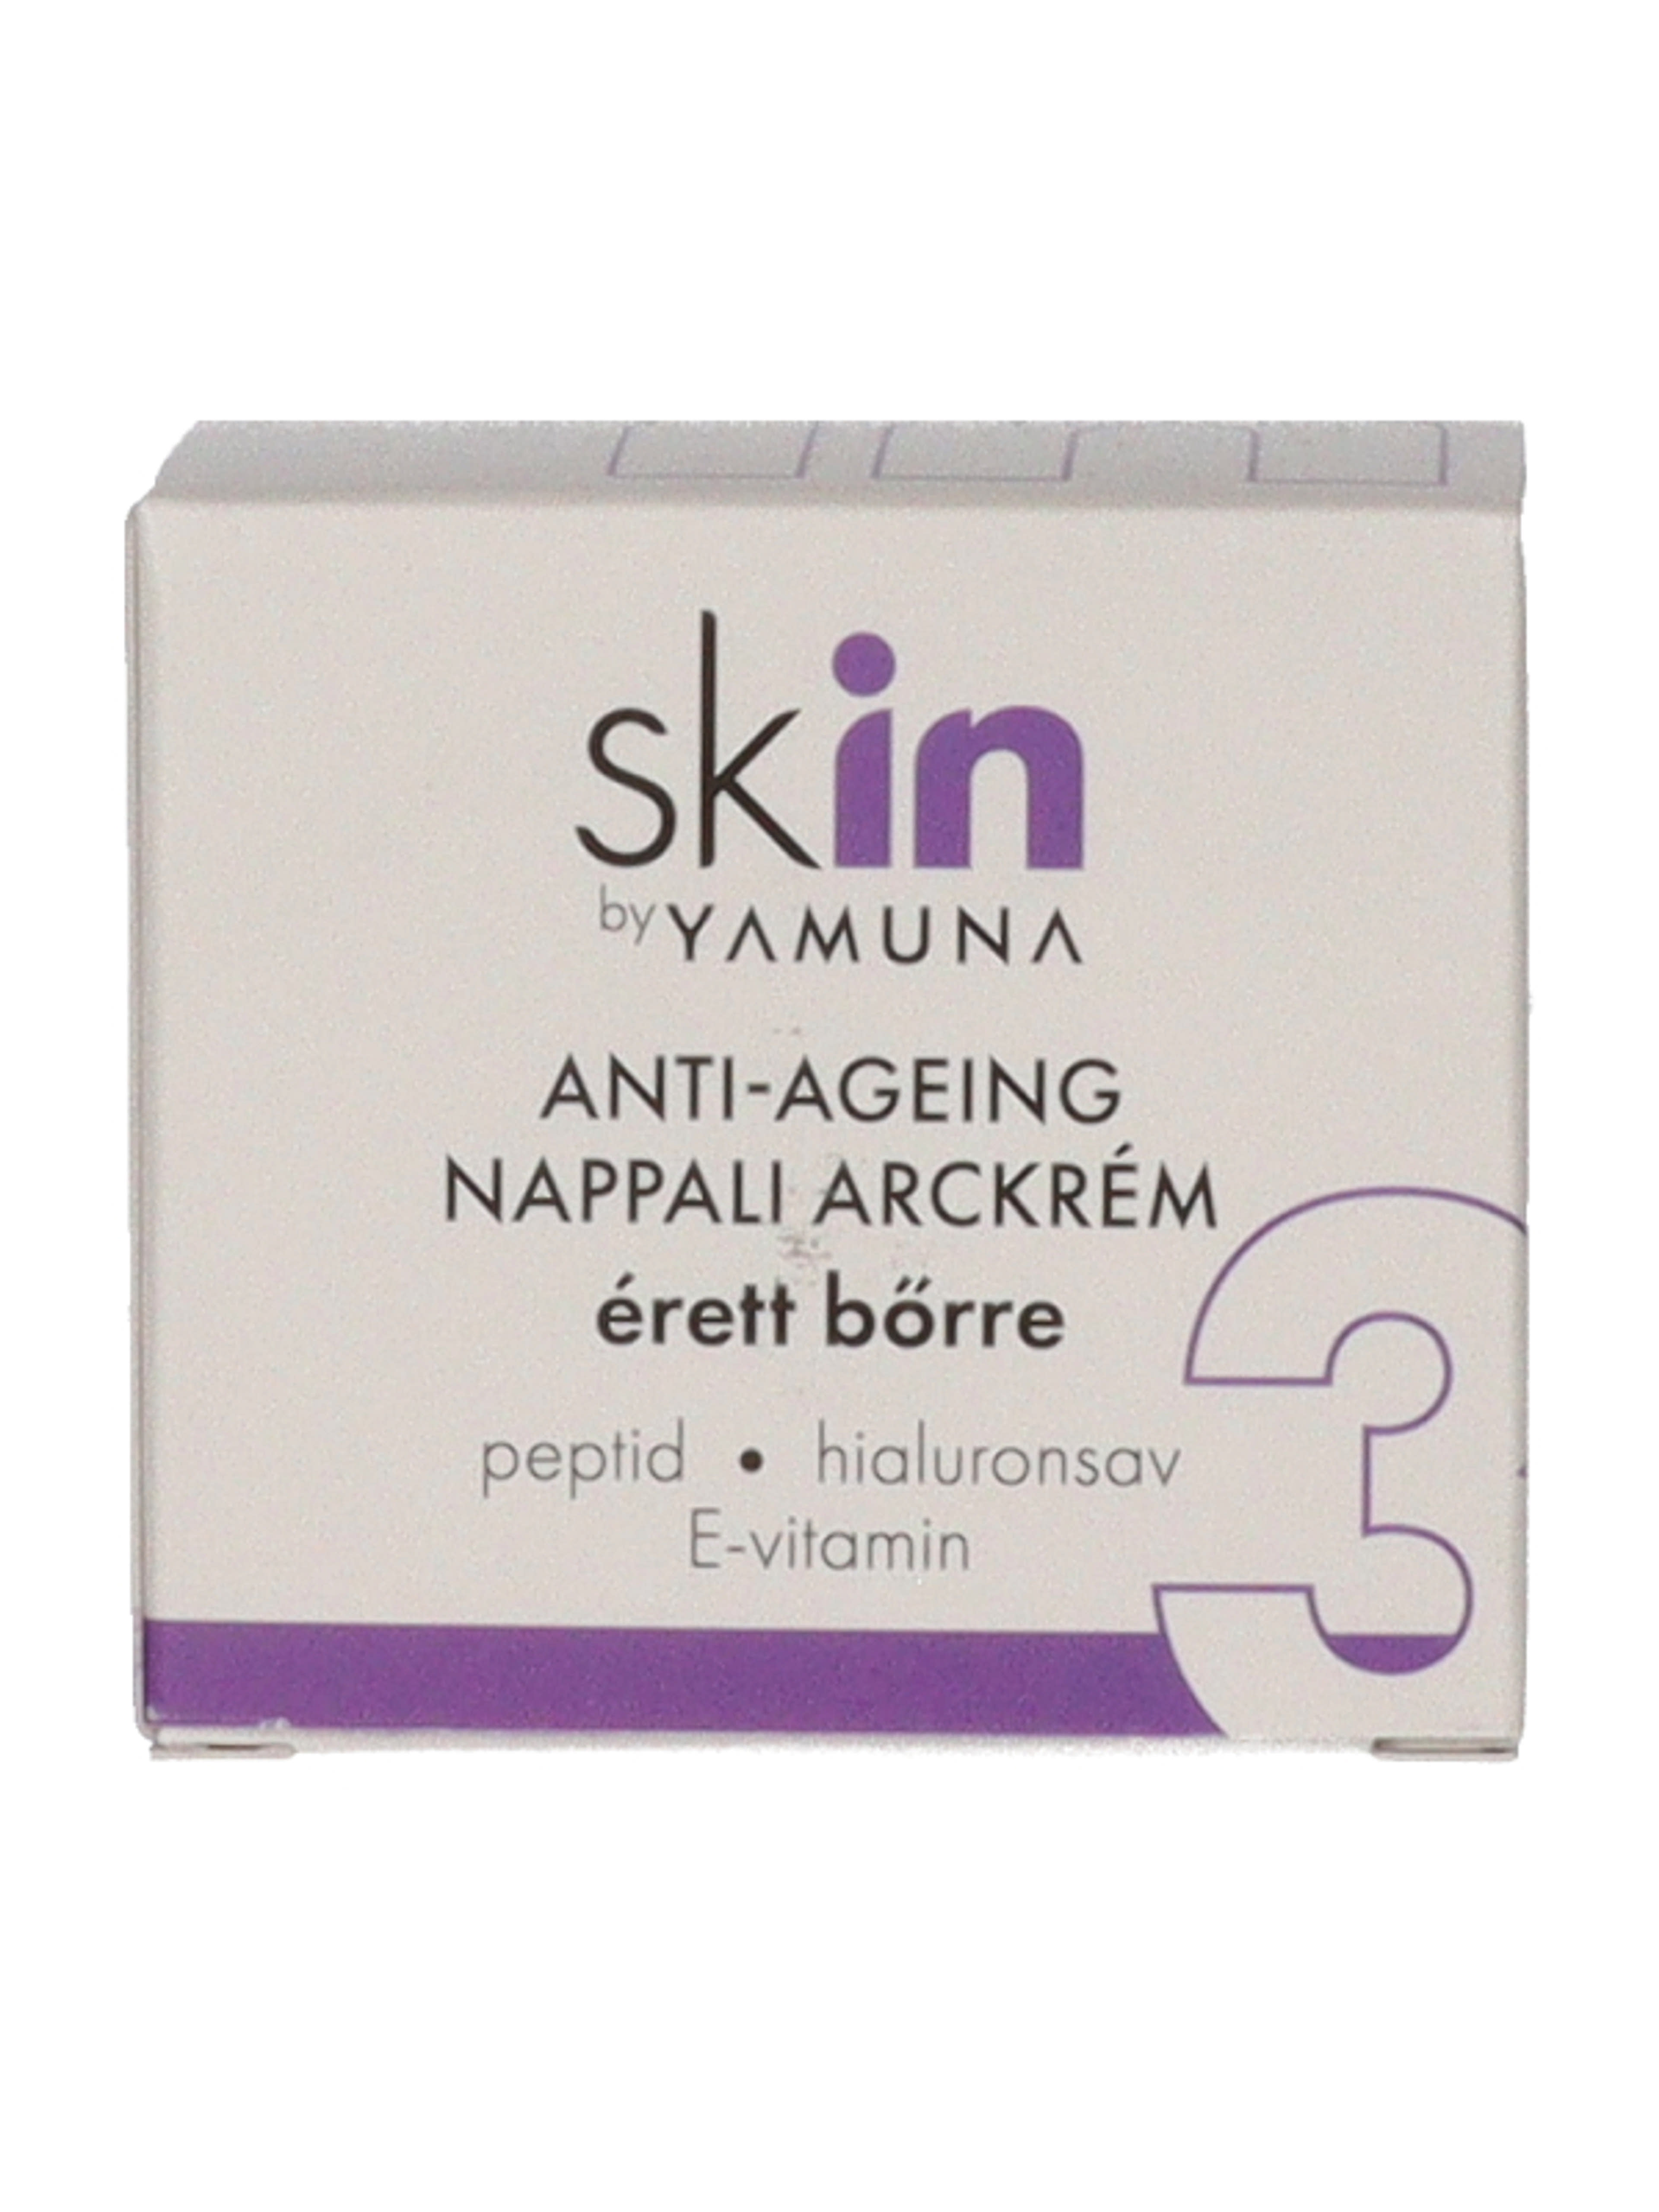 Yamuna Skin Anti-Ageing nappali arckrém - 50 ml-2